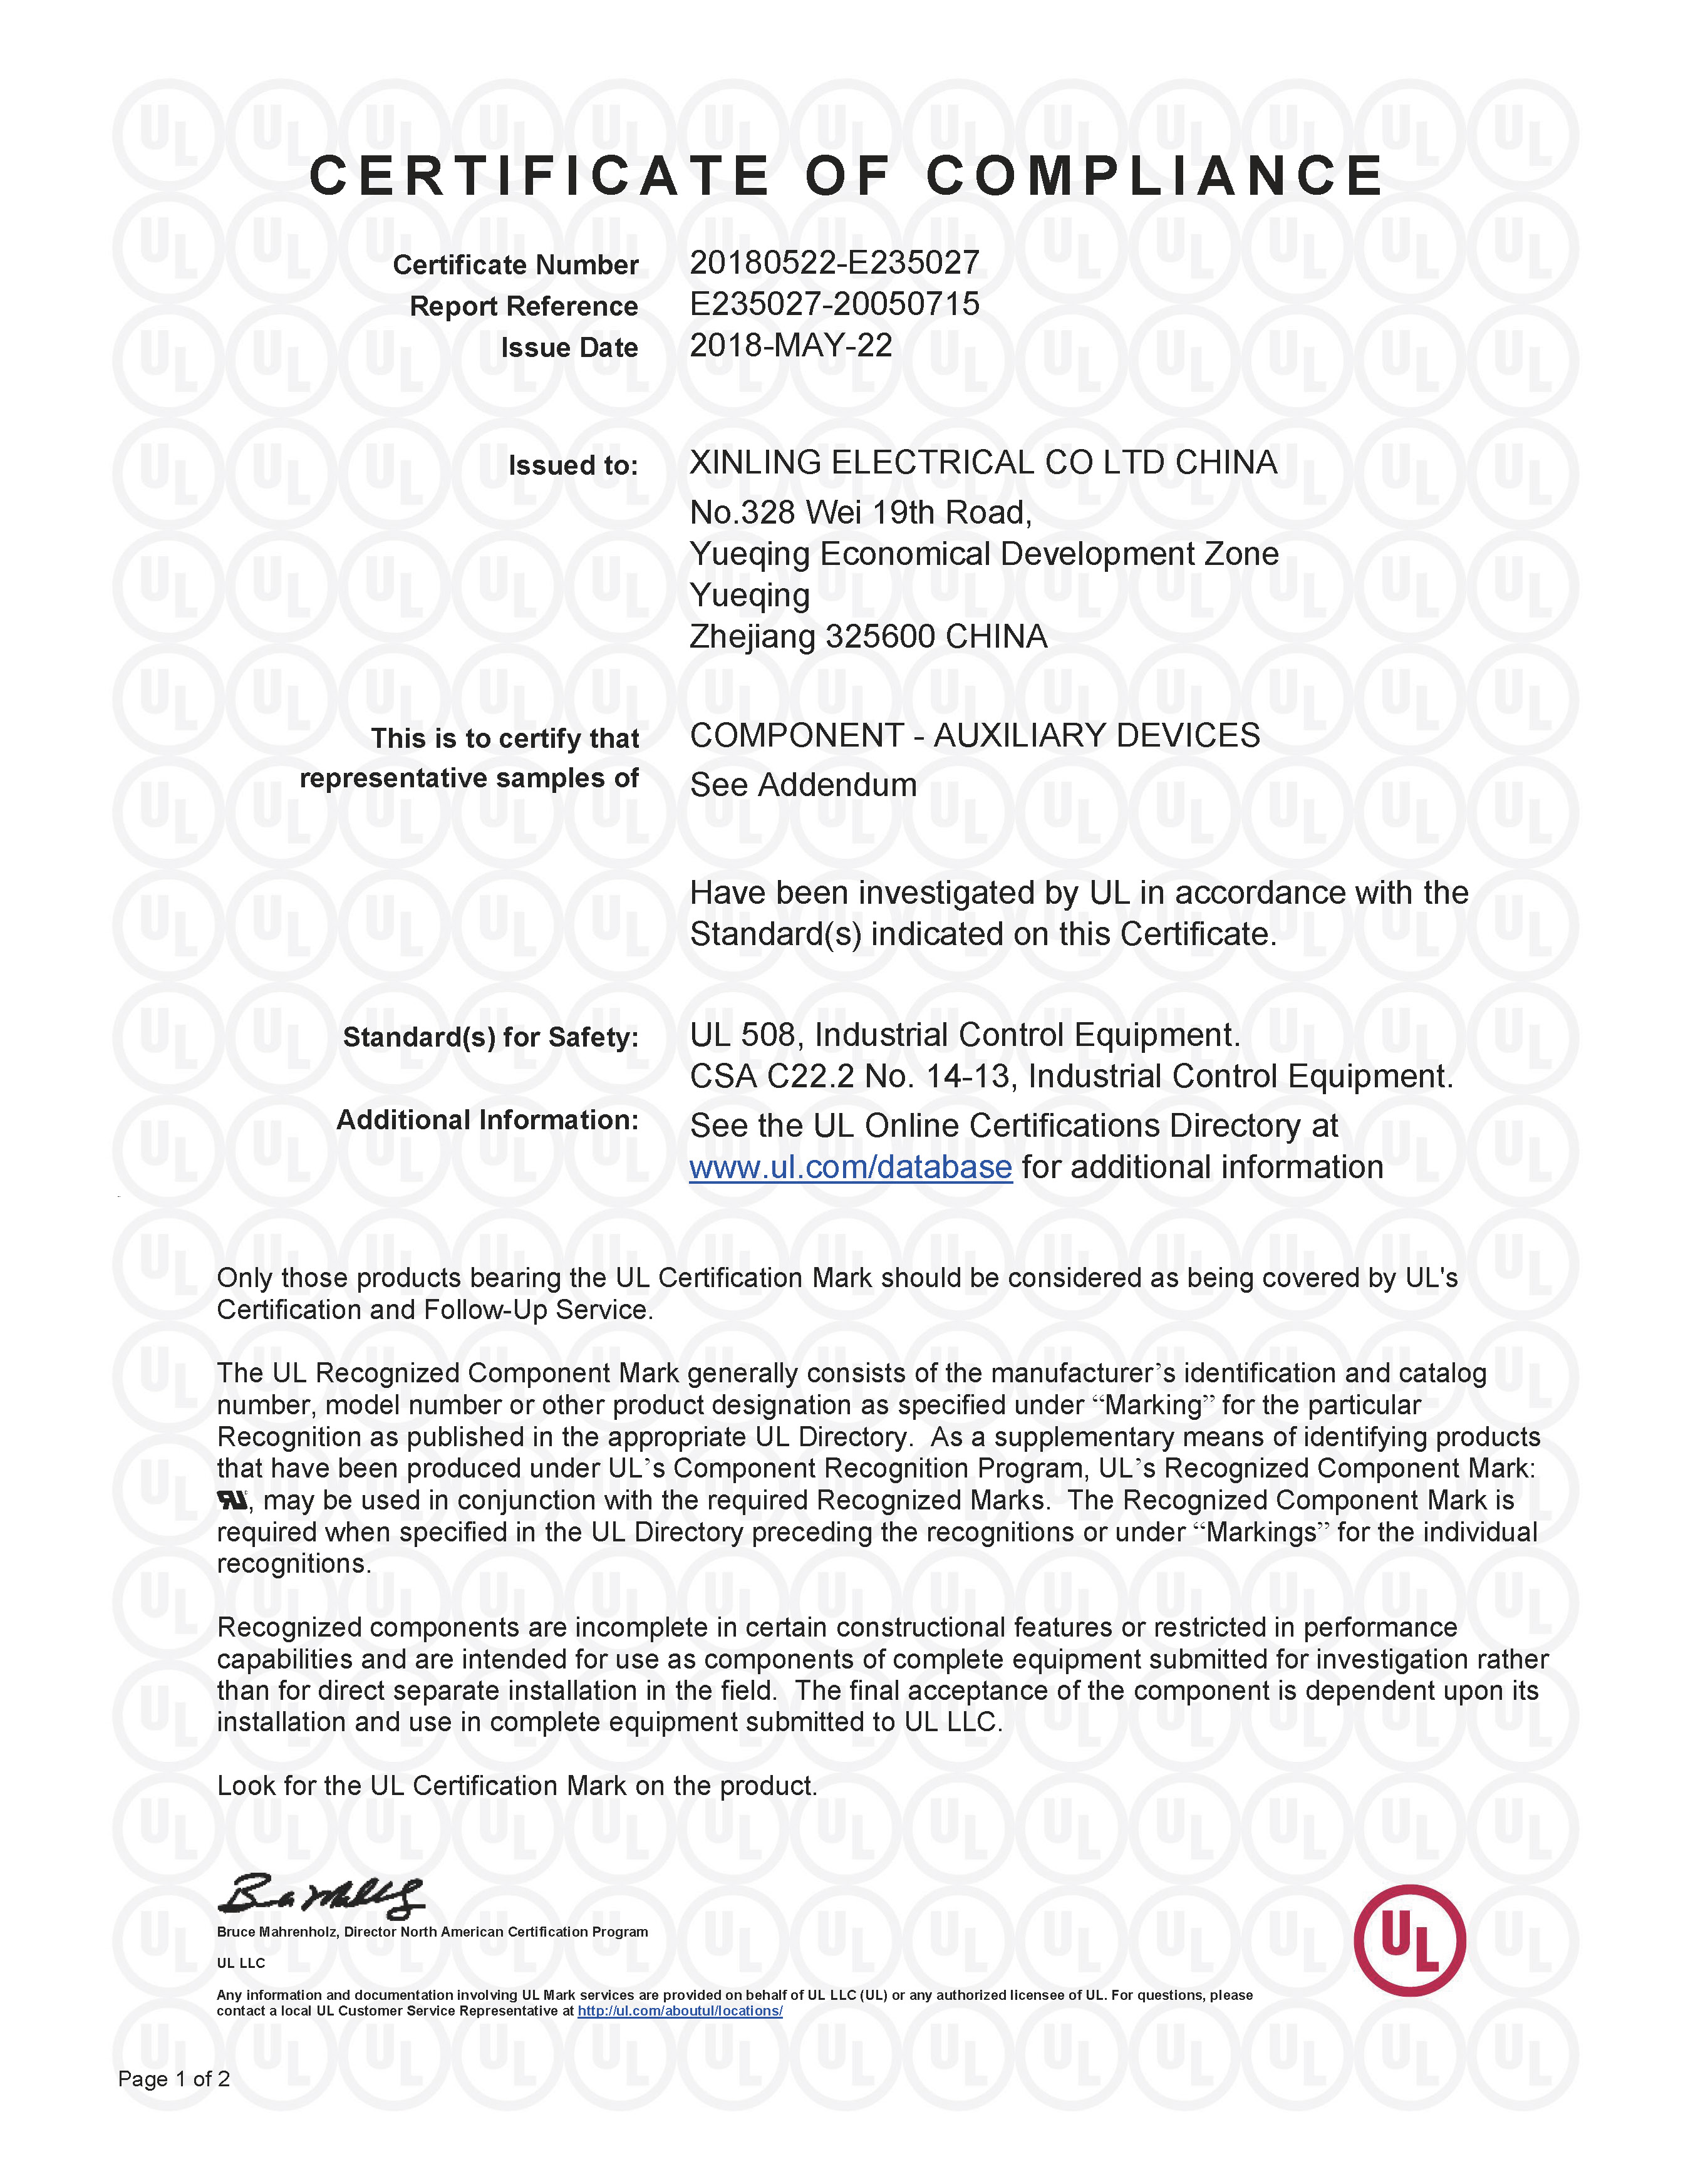 E235027-20050715-CertificateofCompliance_页面_1